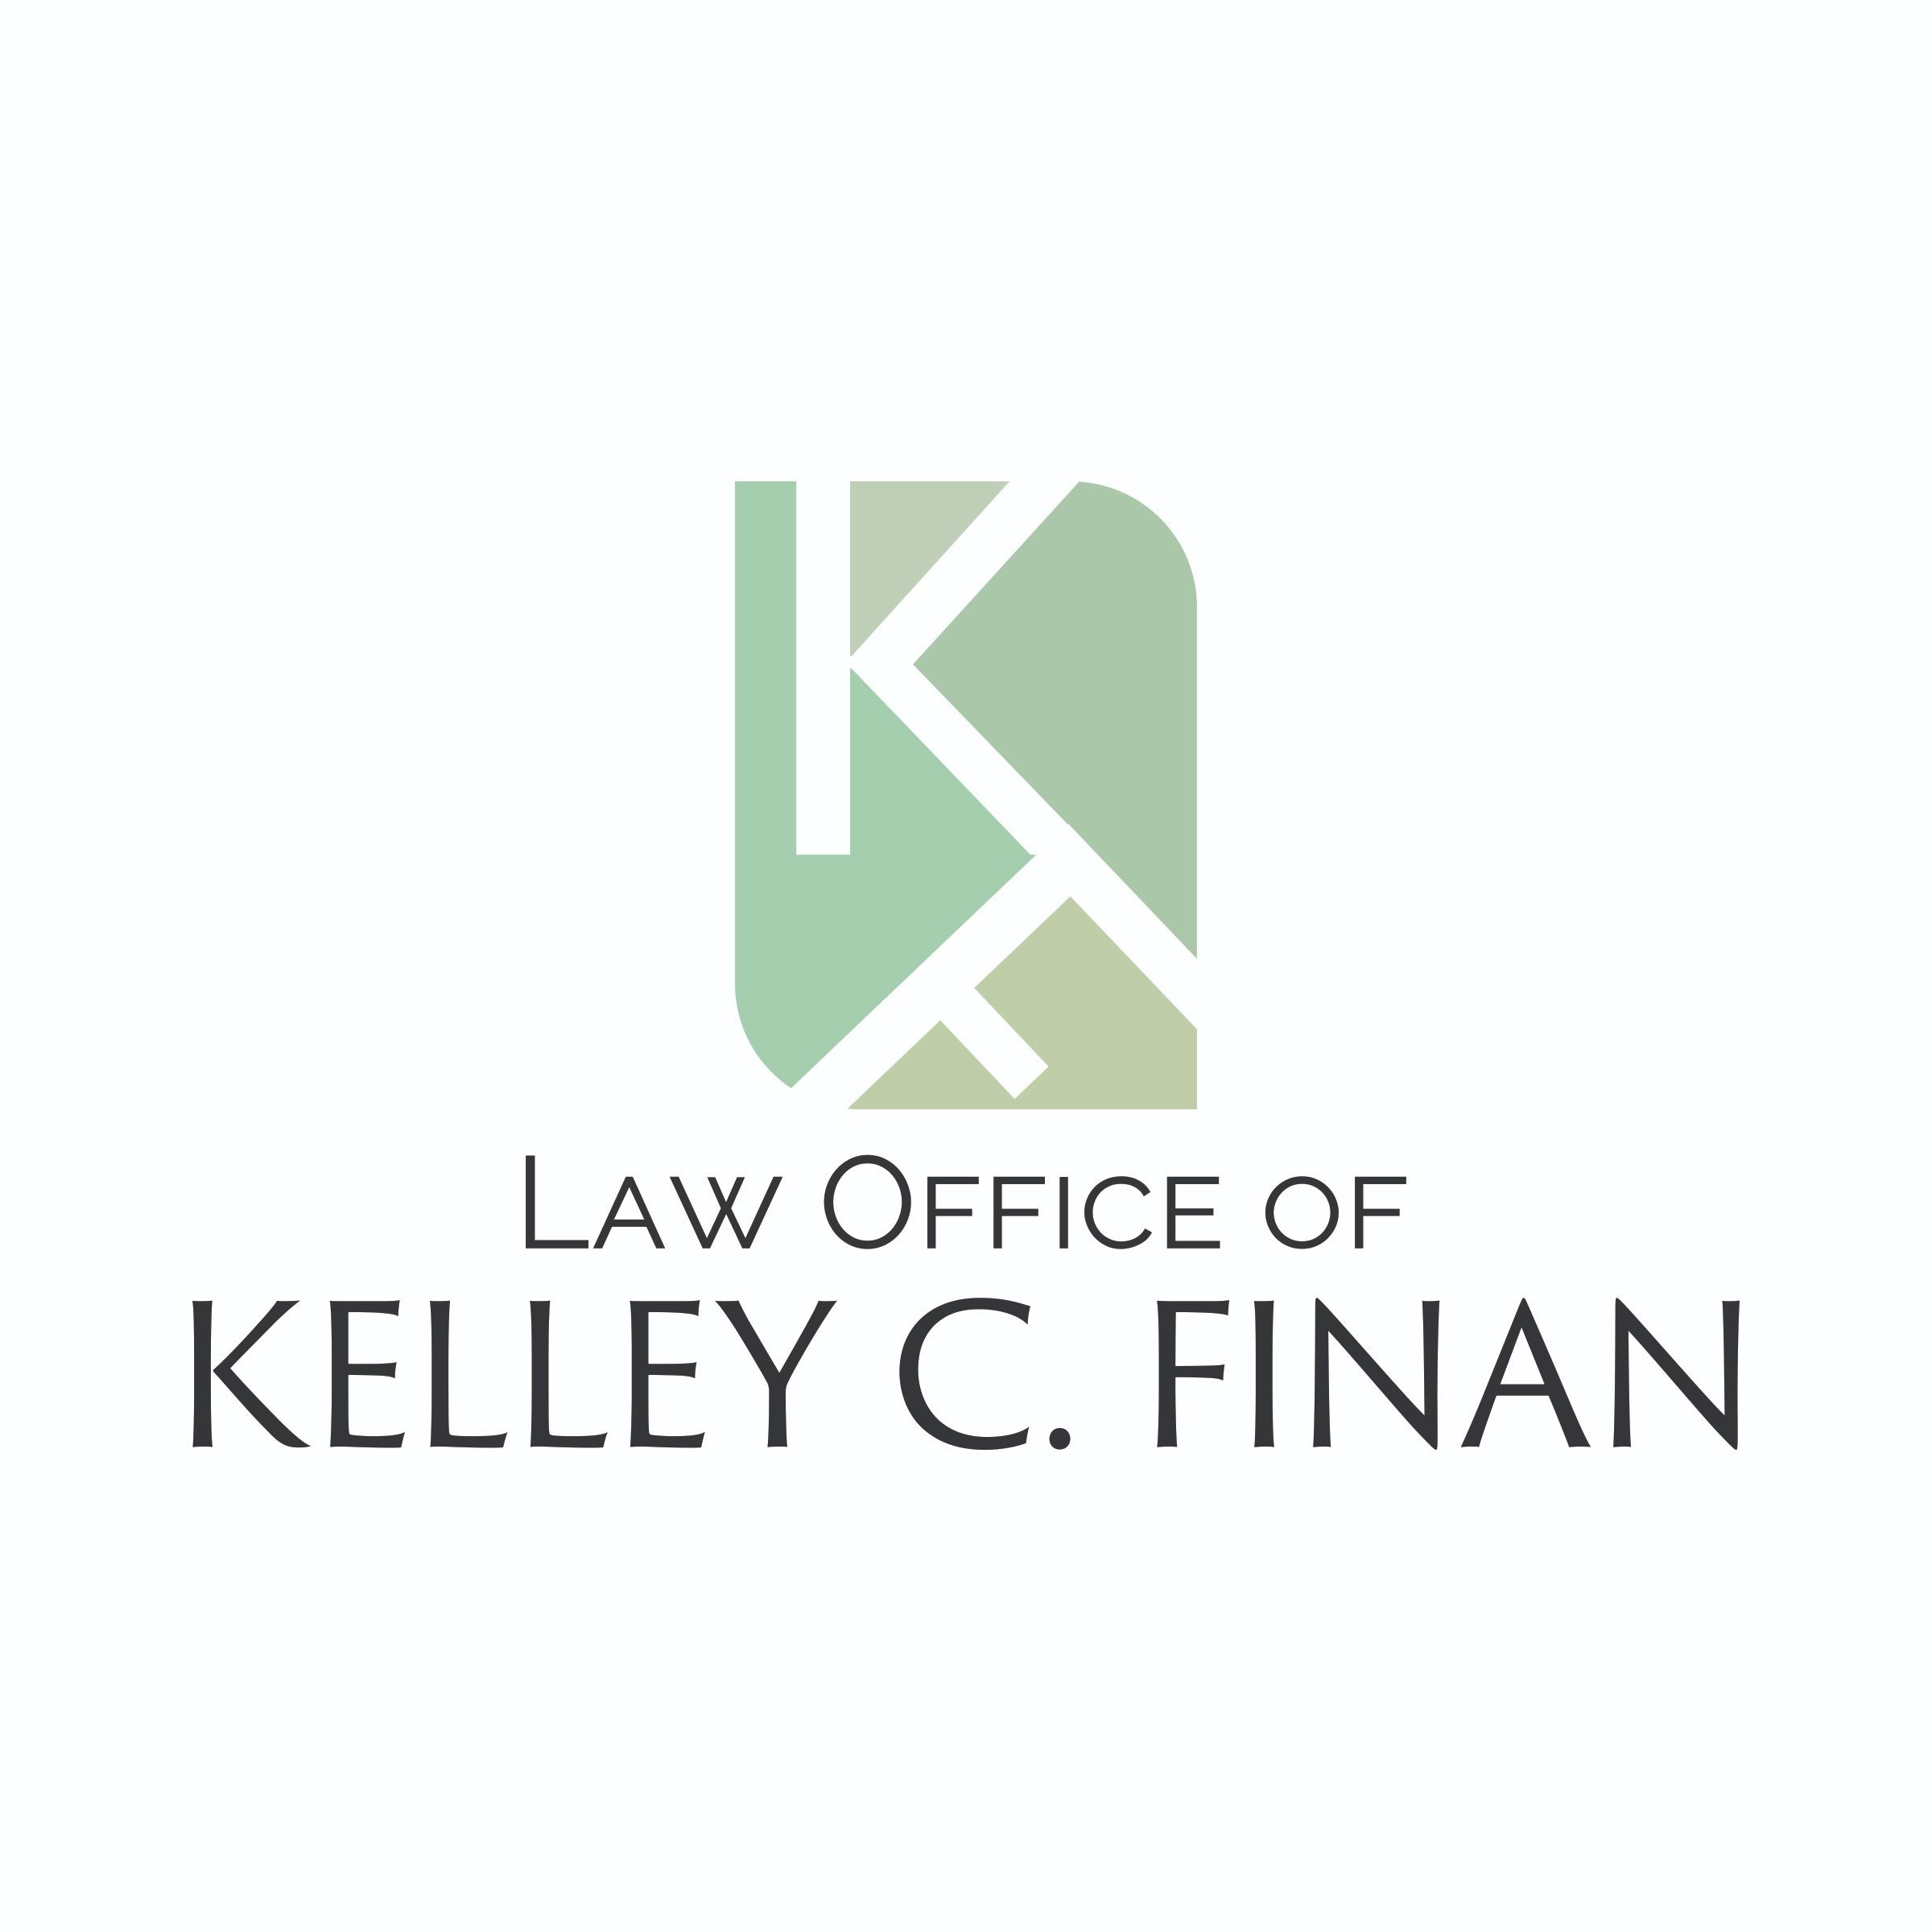 Law Office of Kelley C. Finan - Torrance, CA 90503 - (424)392-7865 | ShowMeLocal.com